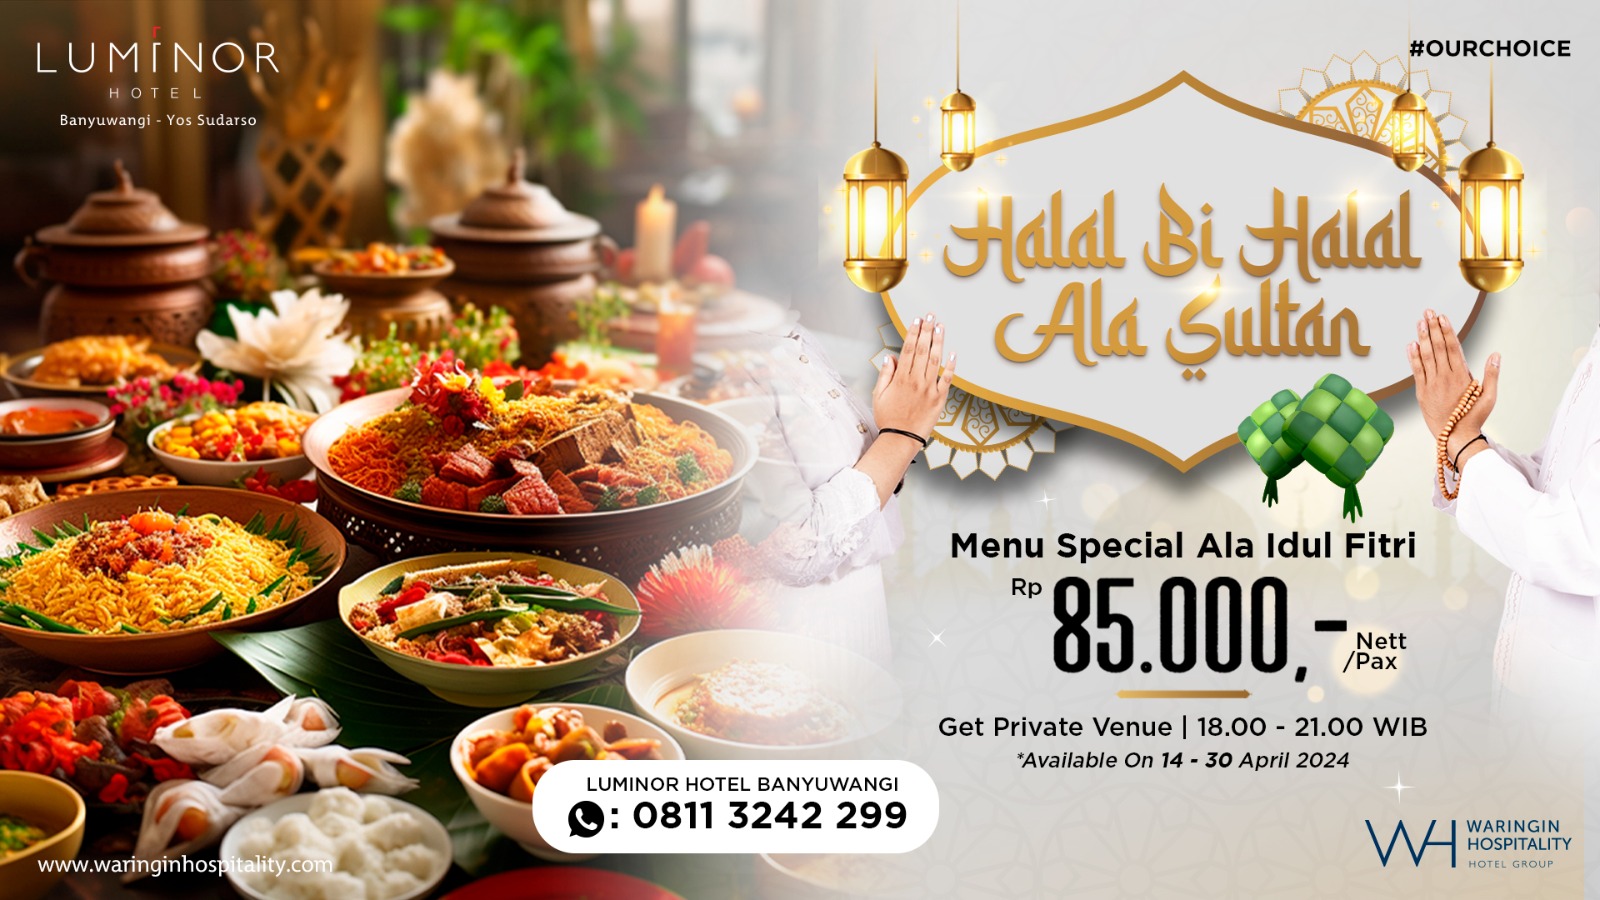 Luminor Hotel Banyuwangi Tawarkan Halal Bi Halal Mewah Ala Sultan